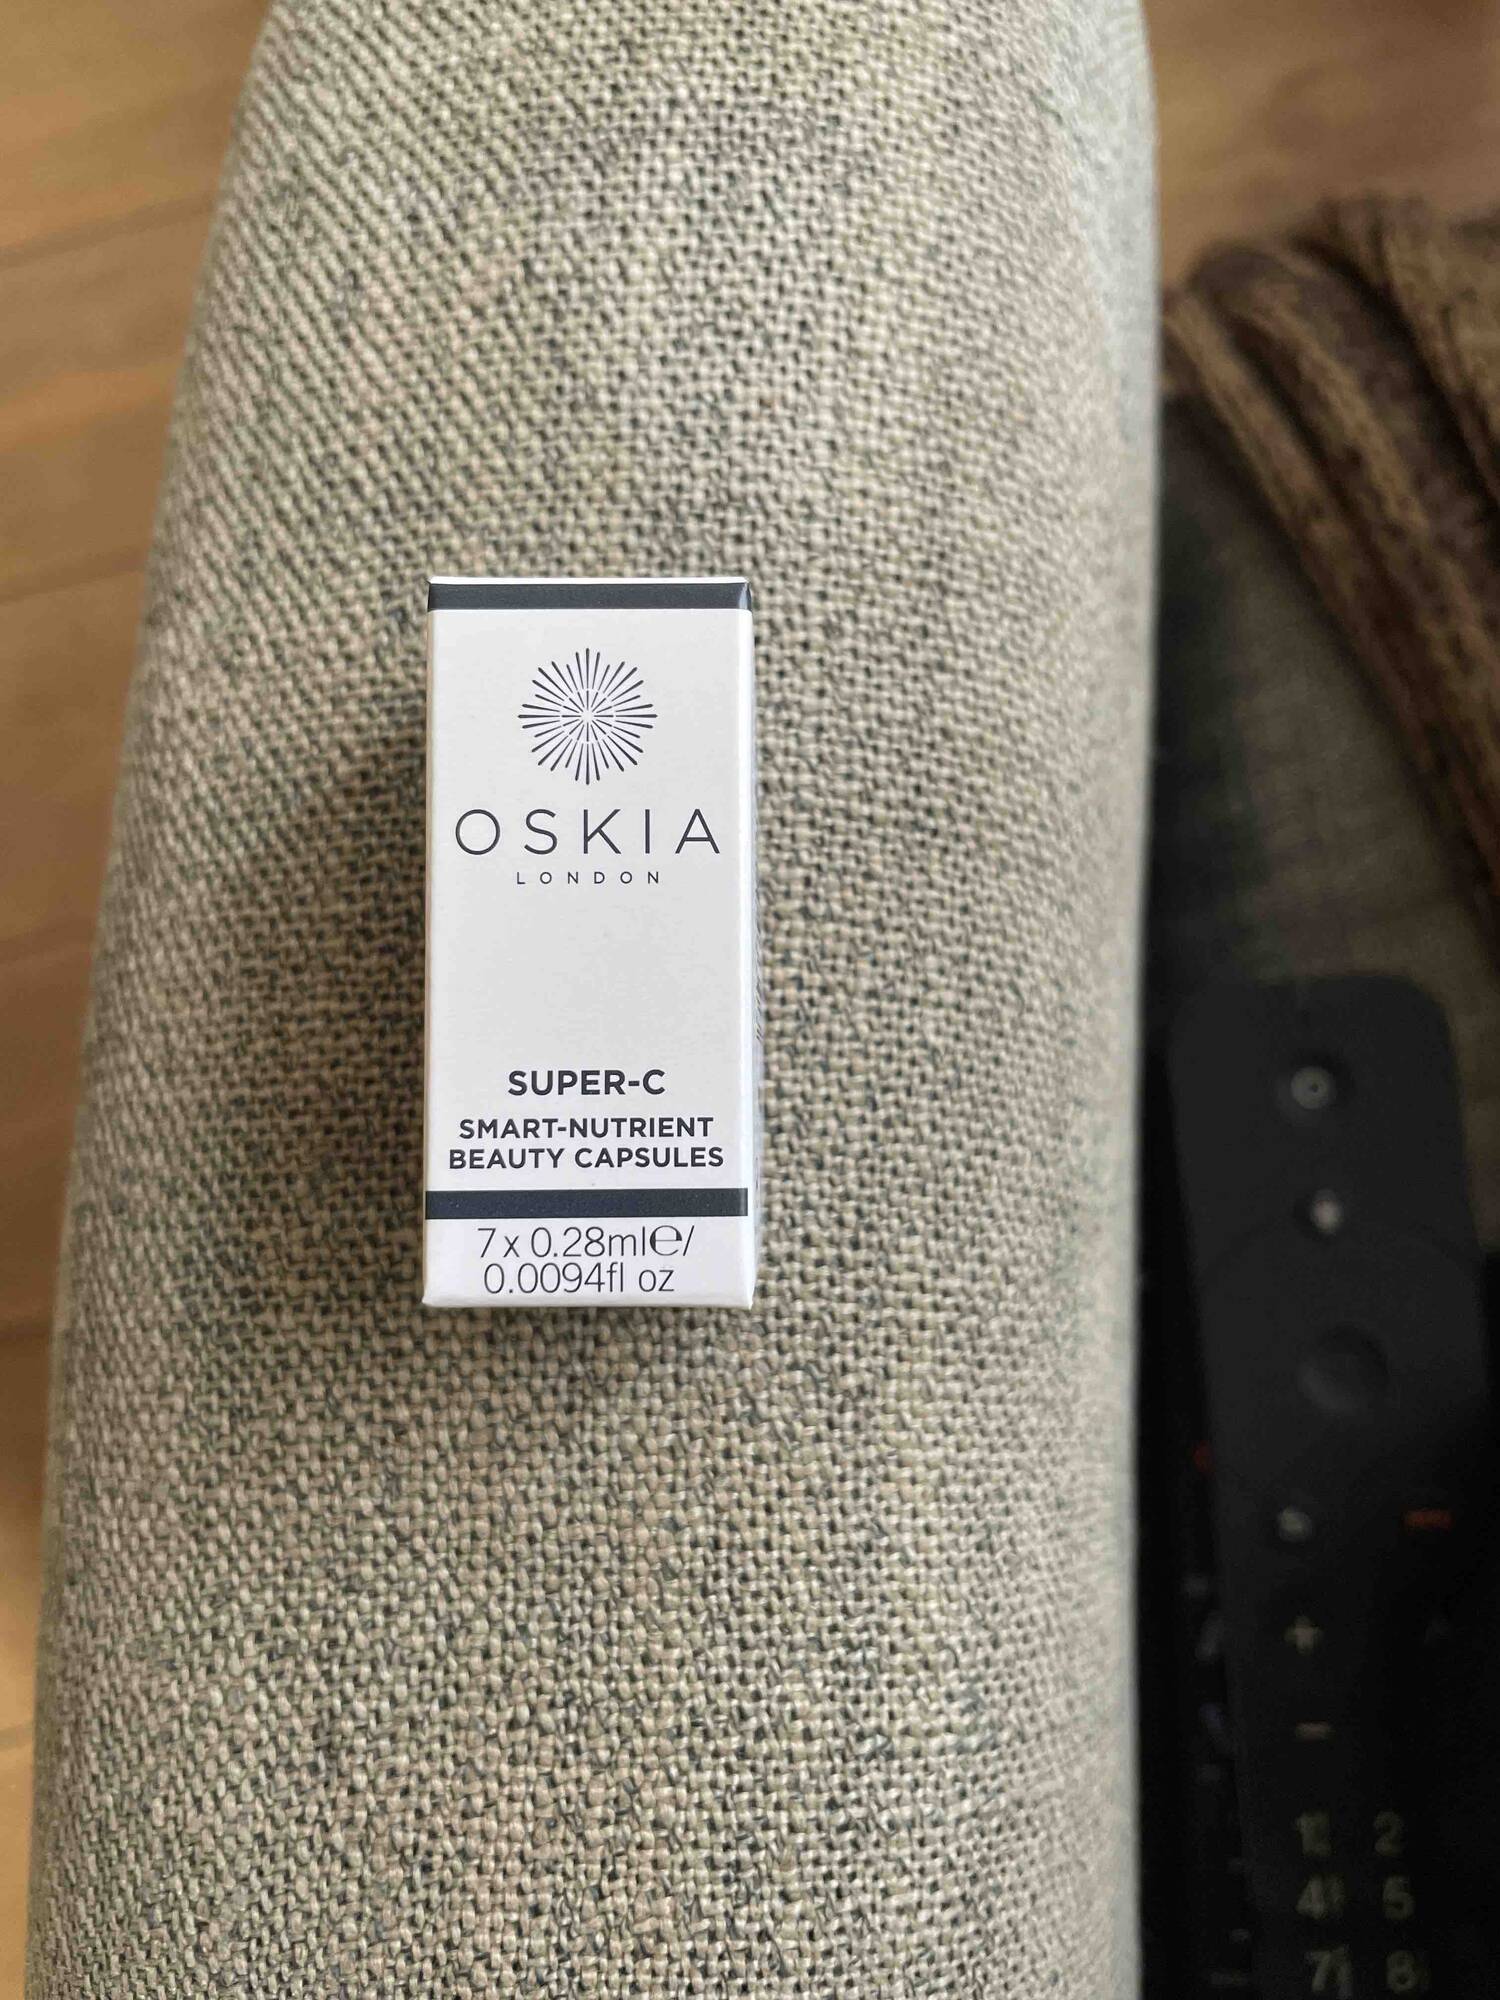 OSKIA - Super-C - Smart-nutrient beauty capsules